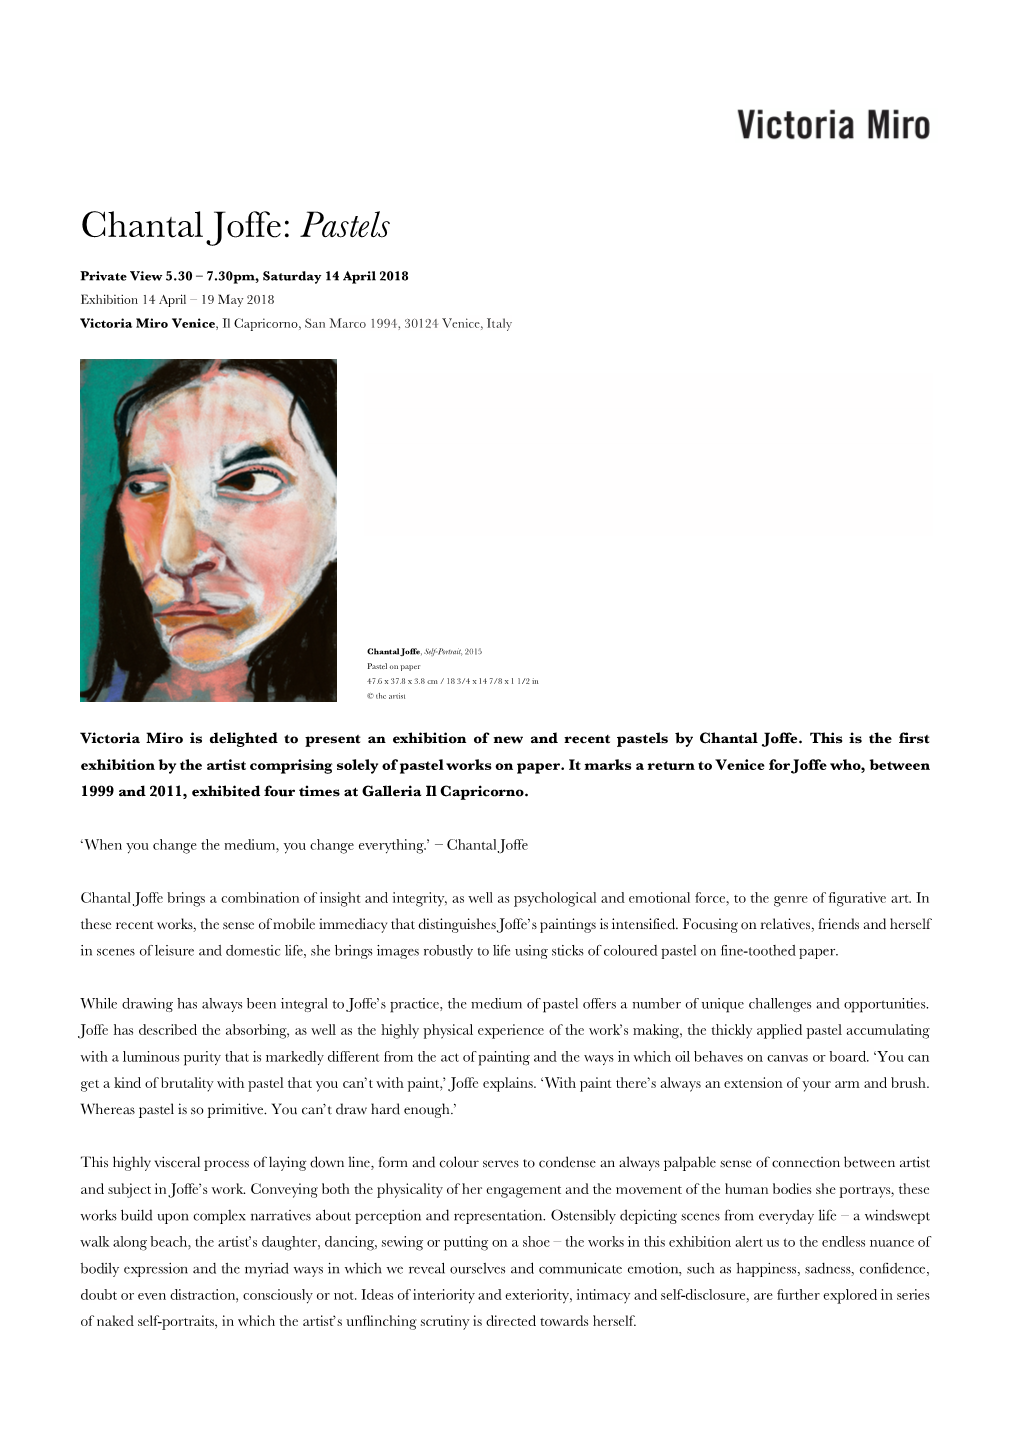 Chantal Joffe: Pastels